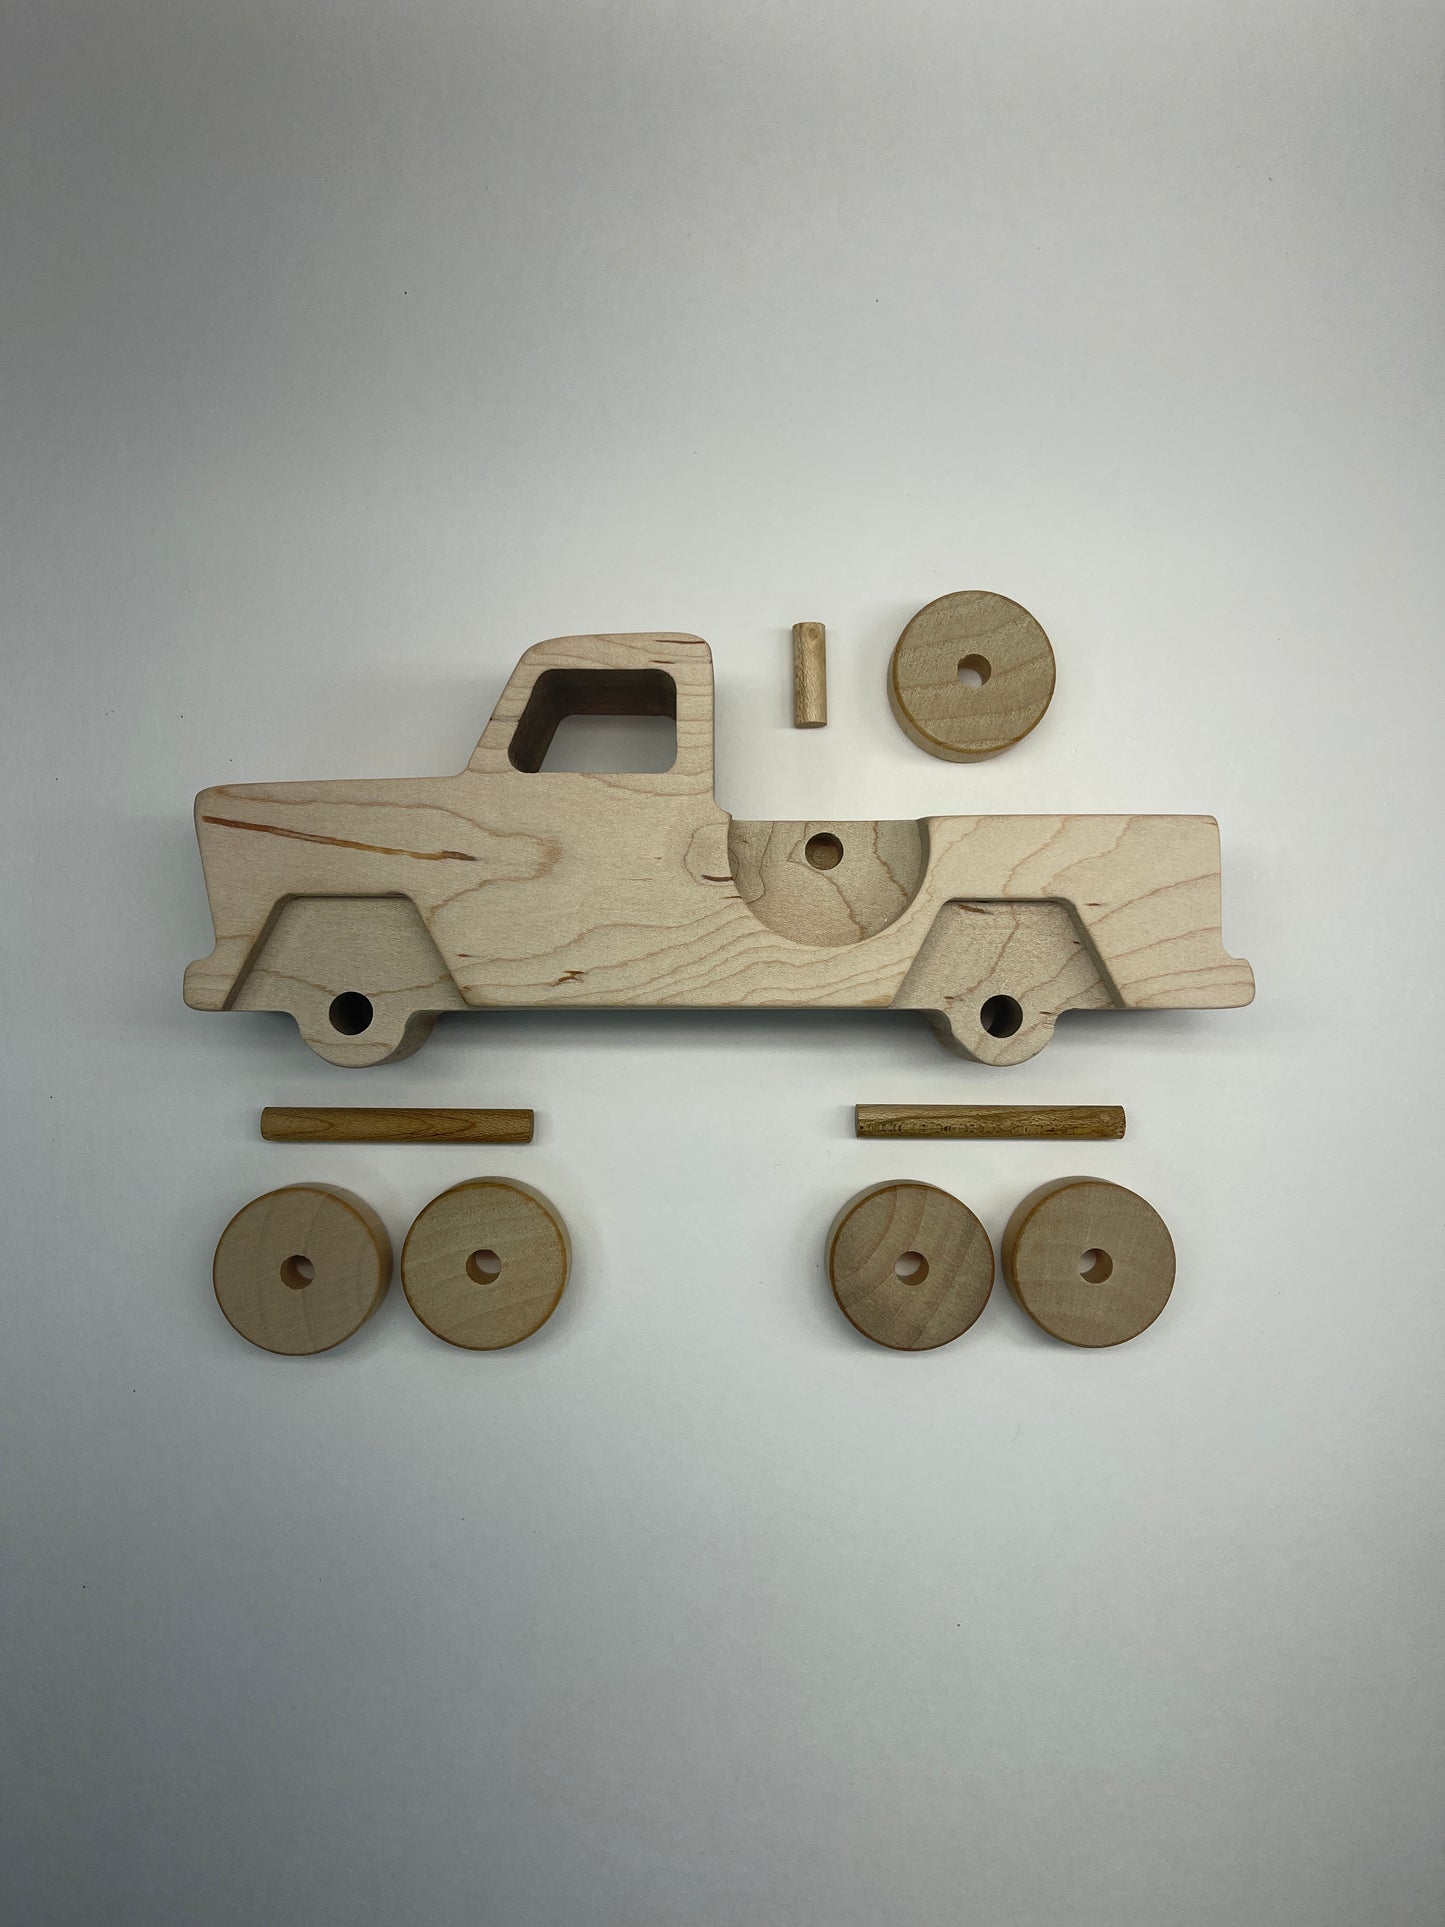 Build-a-Vehicle Kit